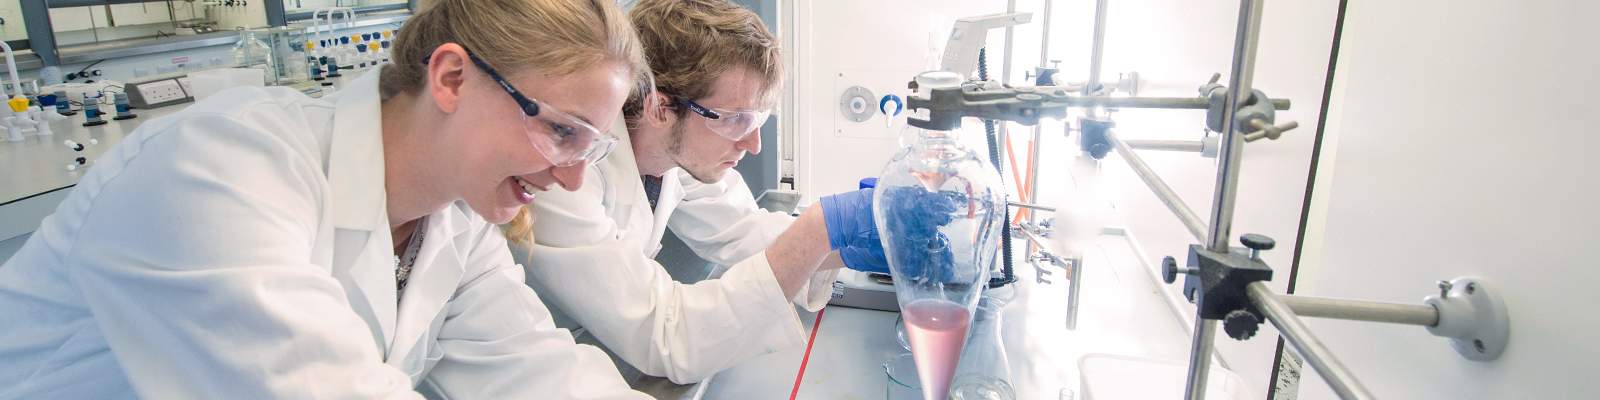 Two students preparing samples